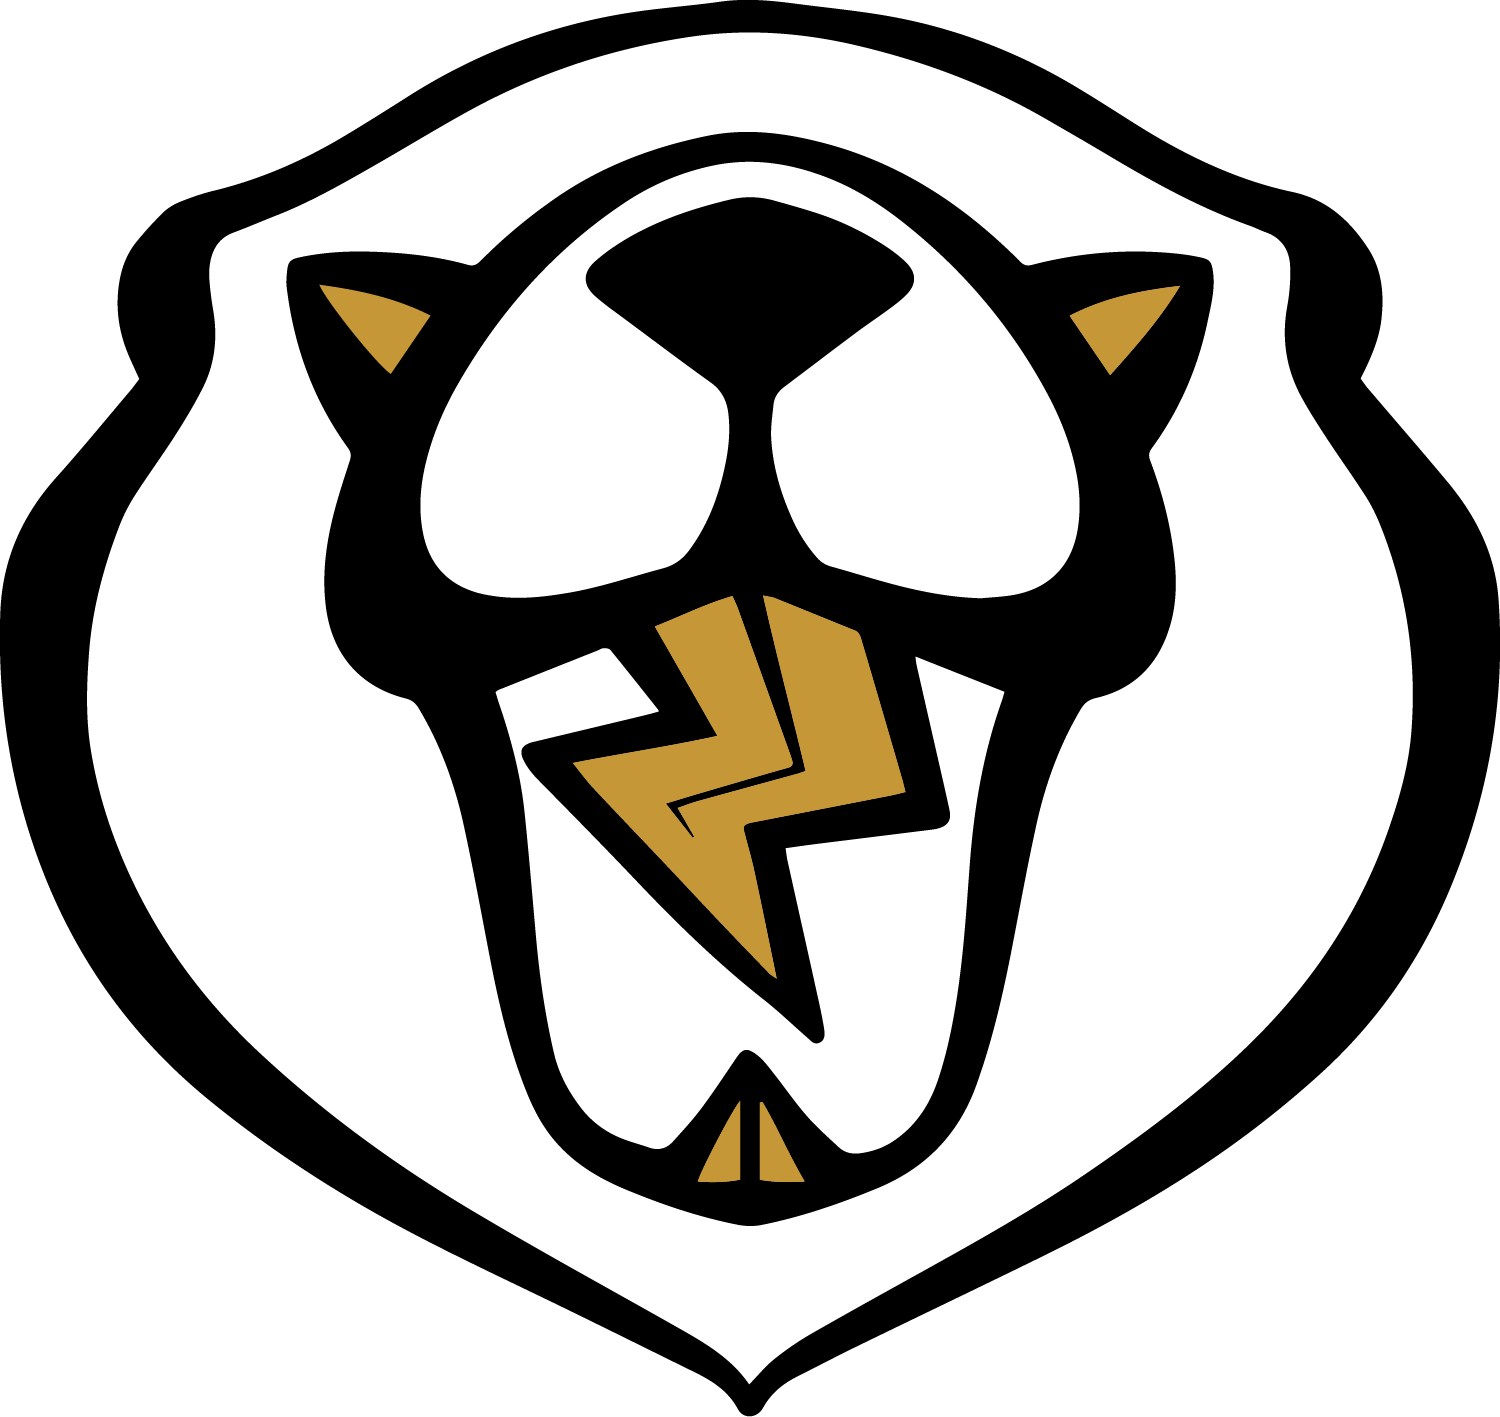 Black and gold marmot logo